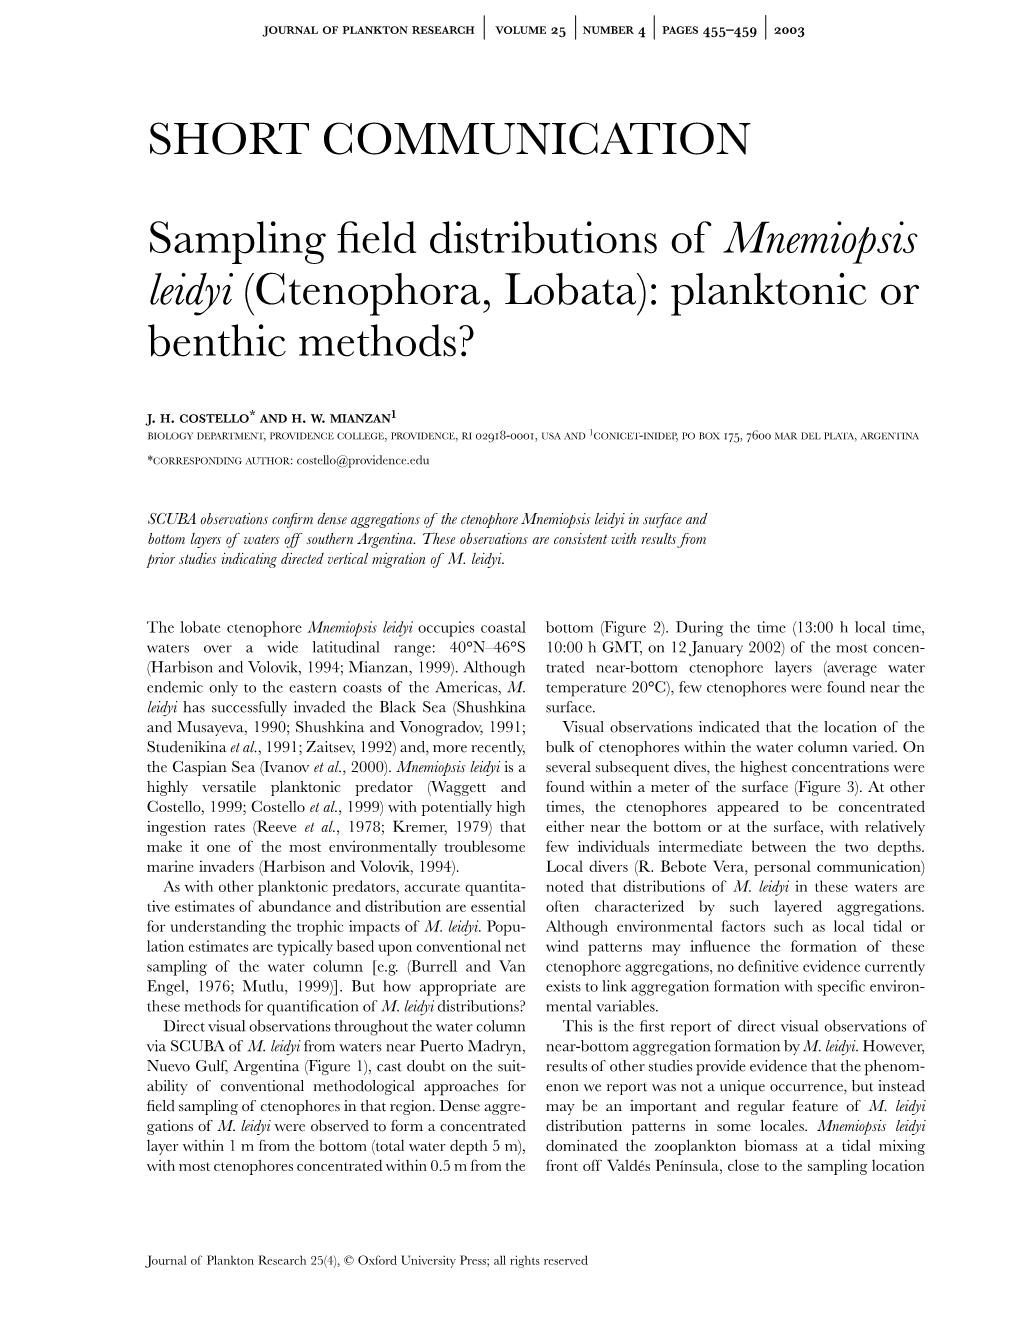 Mnemiopsis Leidyi (Ctenophora, Lobata): Planktonic Or Benthic Methods?